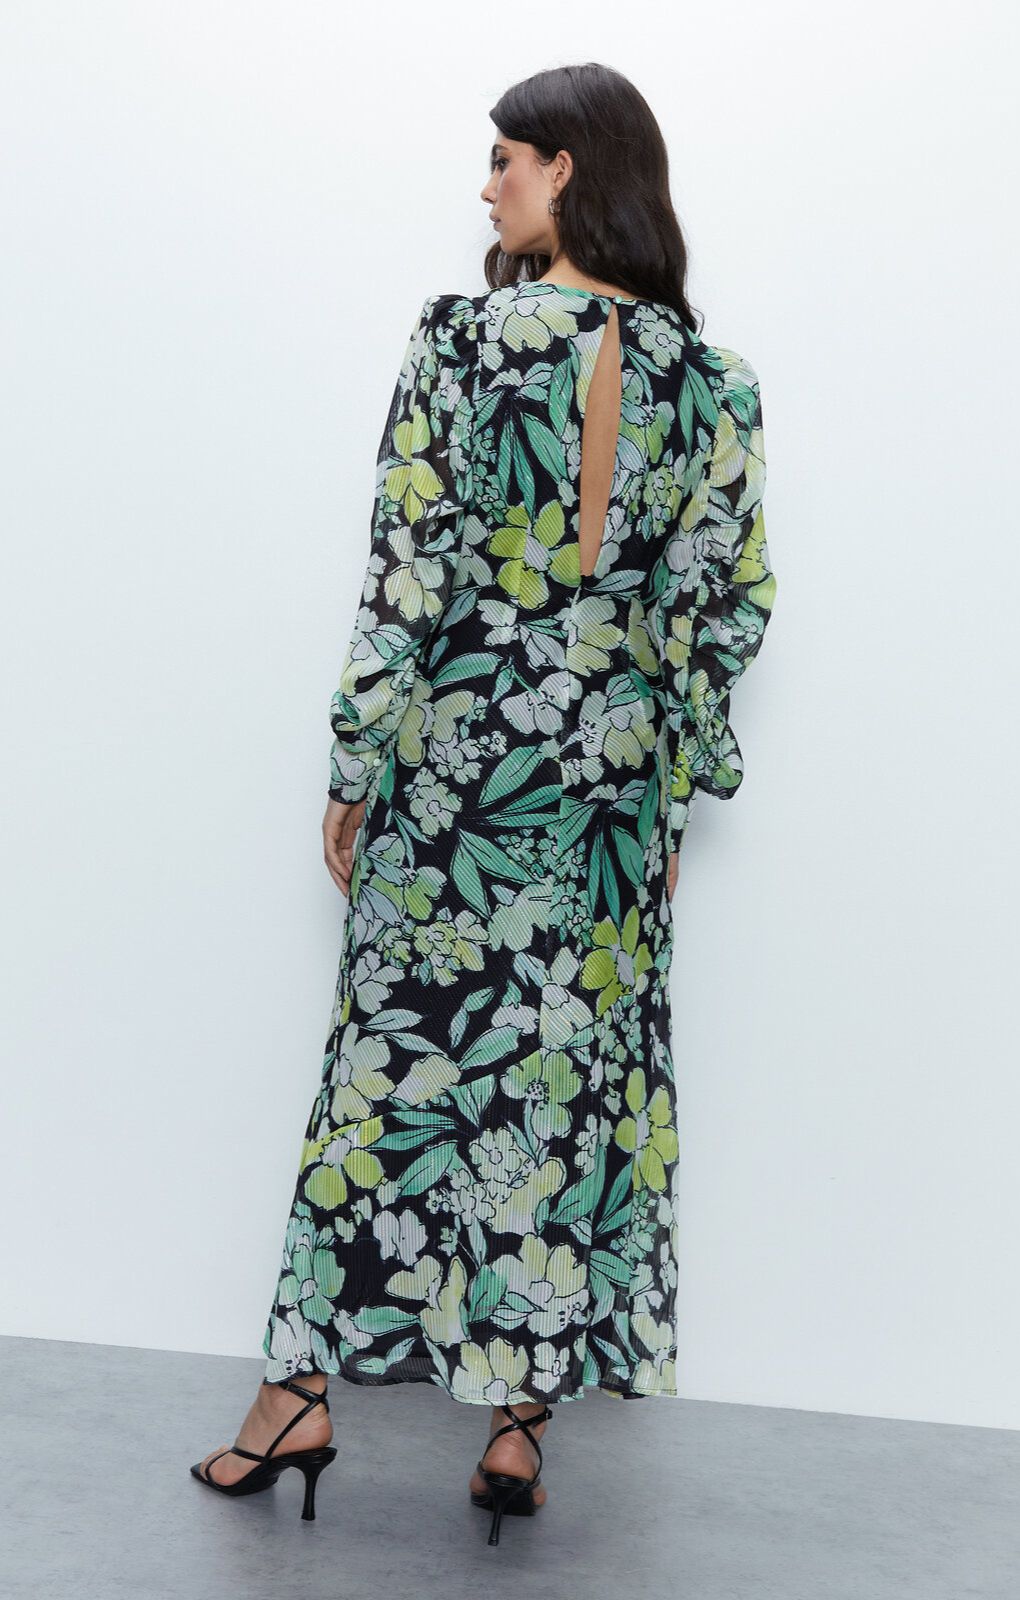 Warehouse Multi Floral Metallic Stripe Printed Midi Dress product image